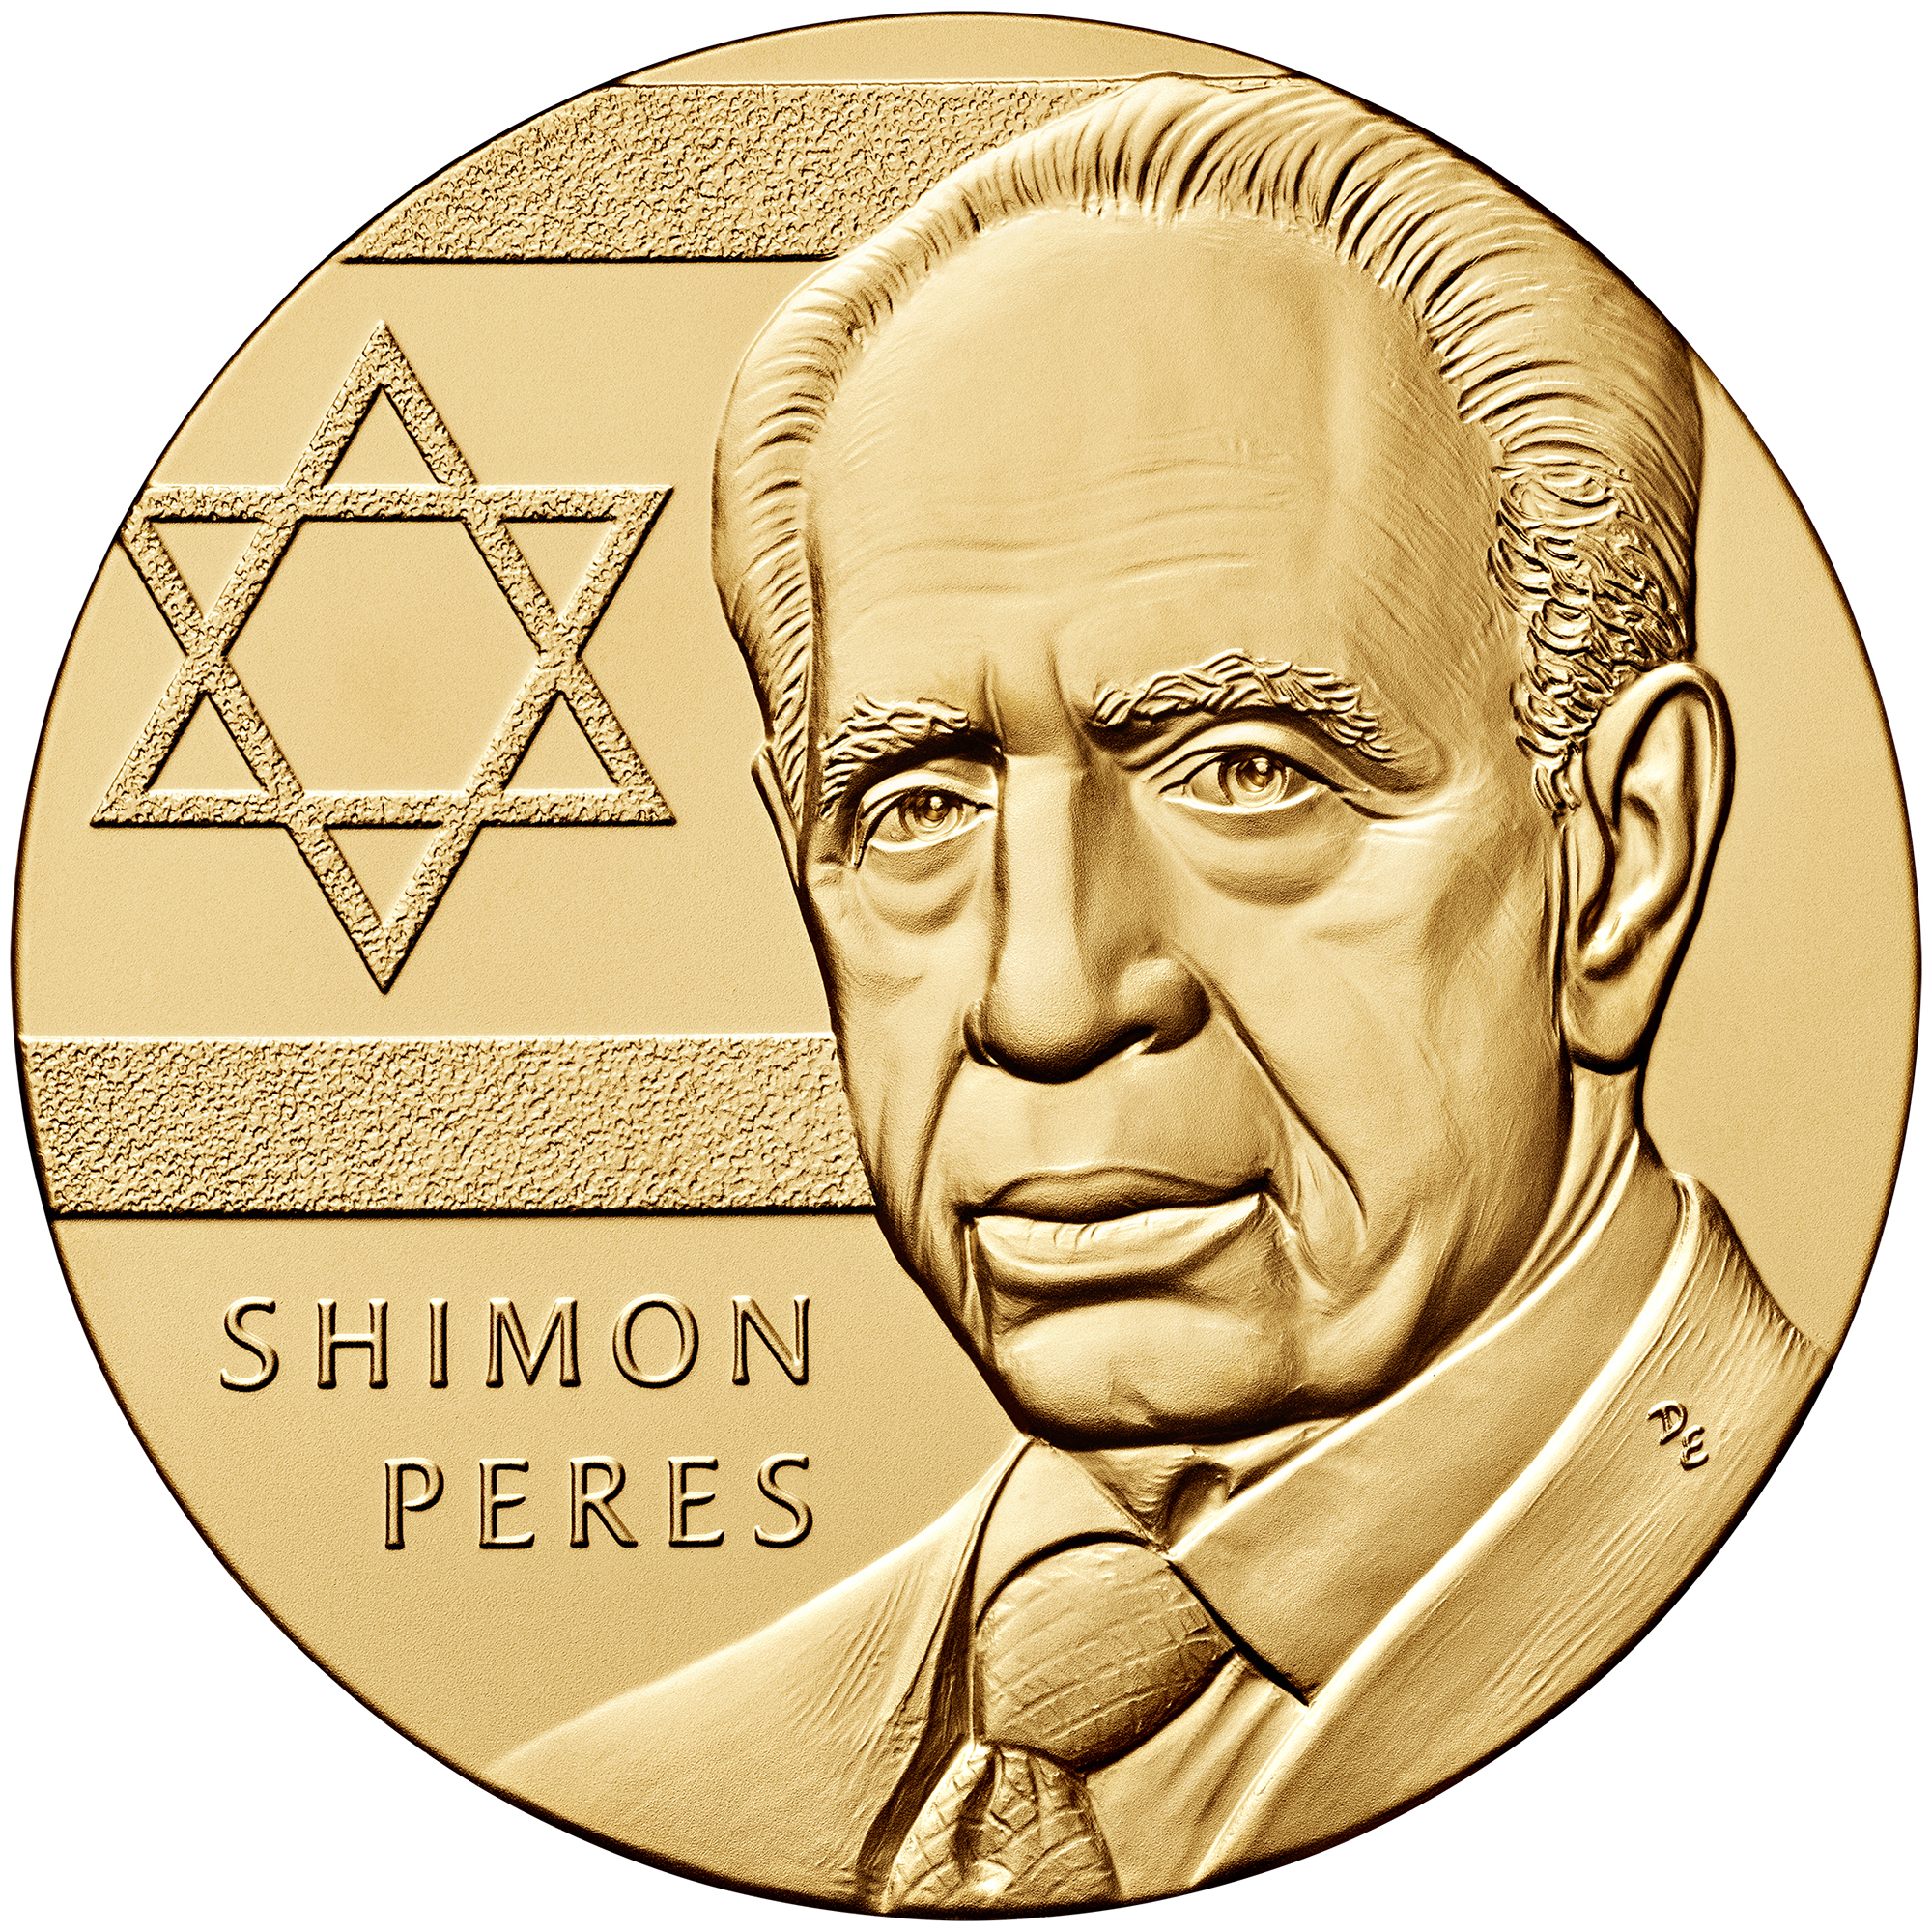 Shimon-Peres-Medal_O_2000